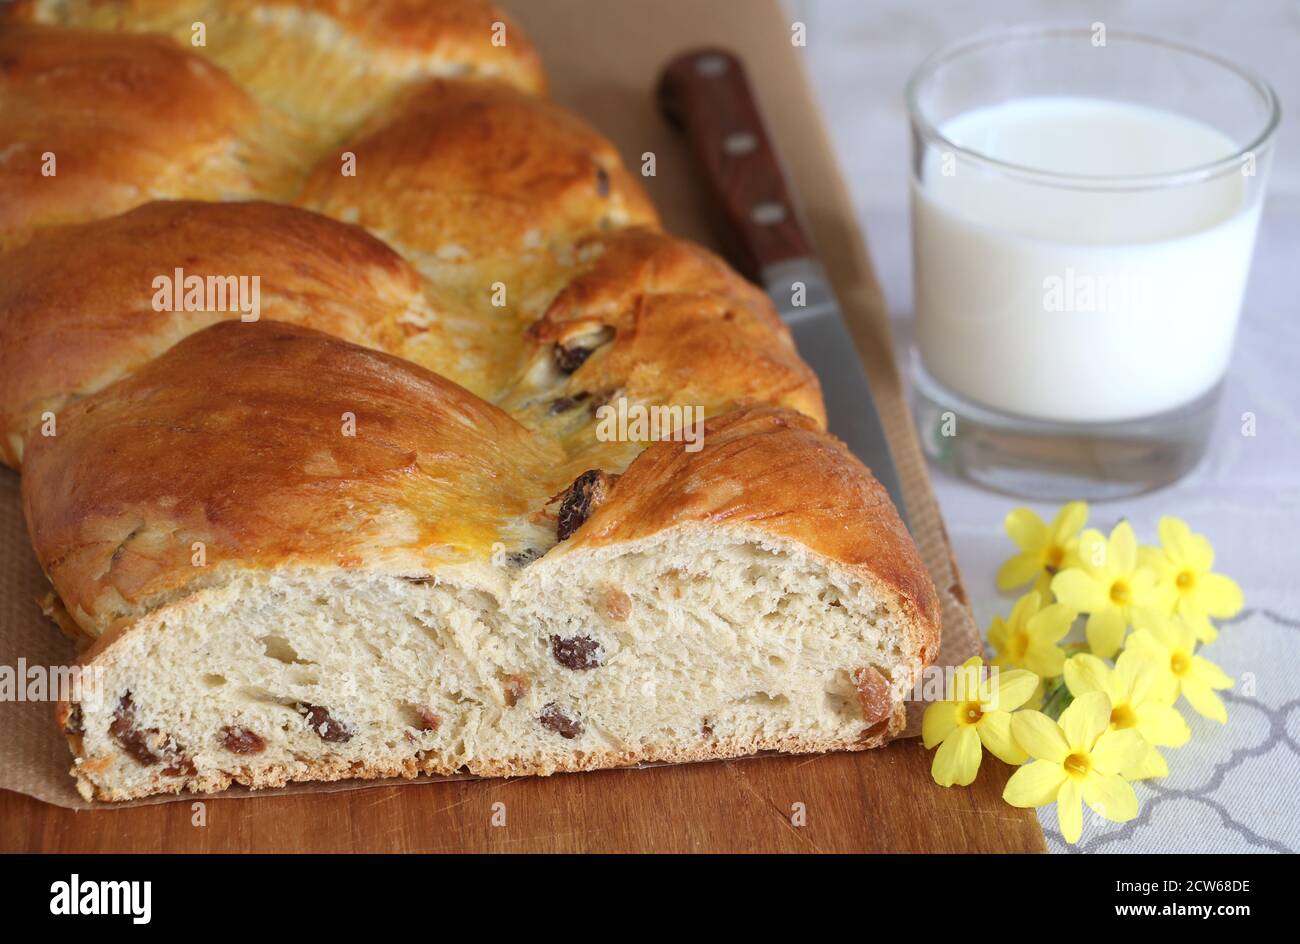 yeast plait with raisins and glass of milk Stock Photo